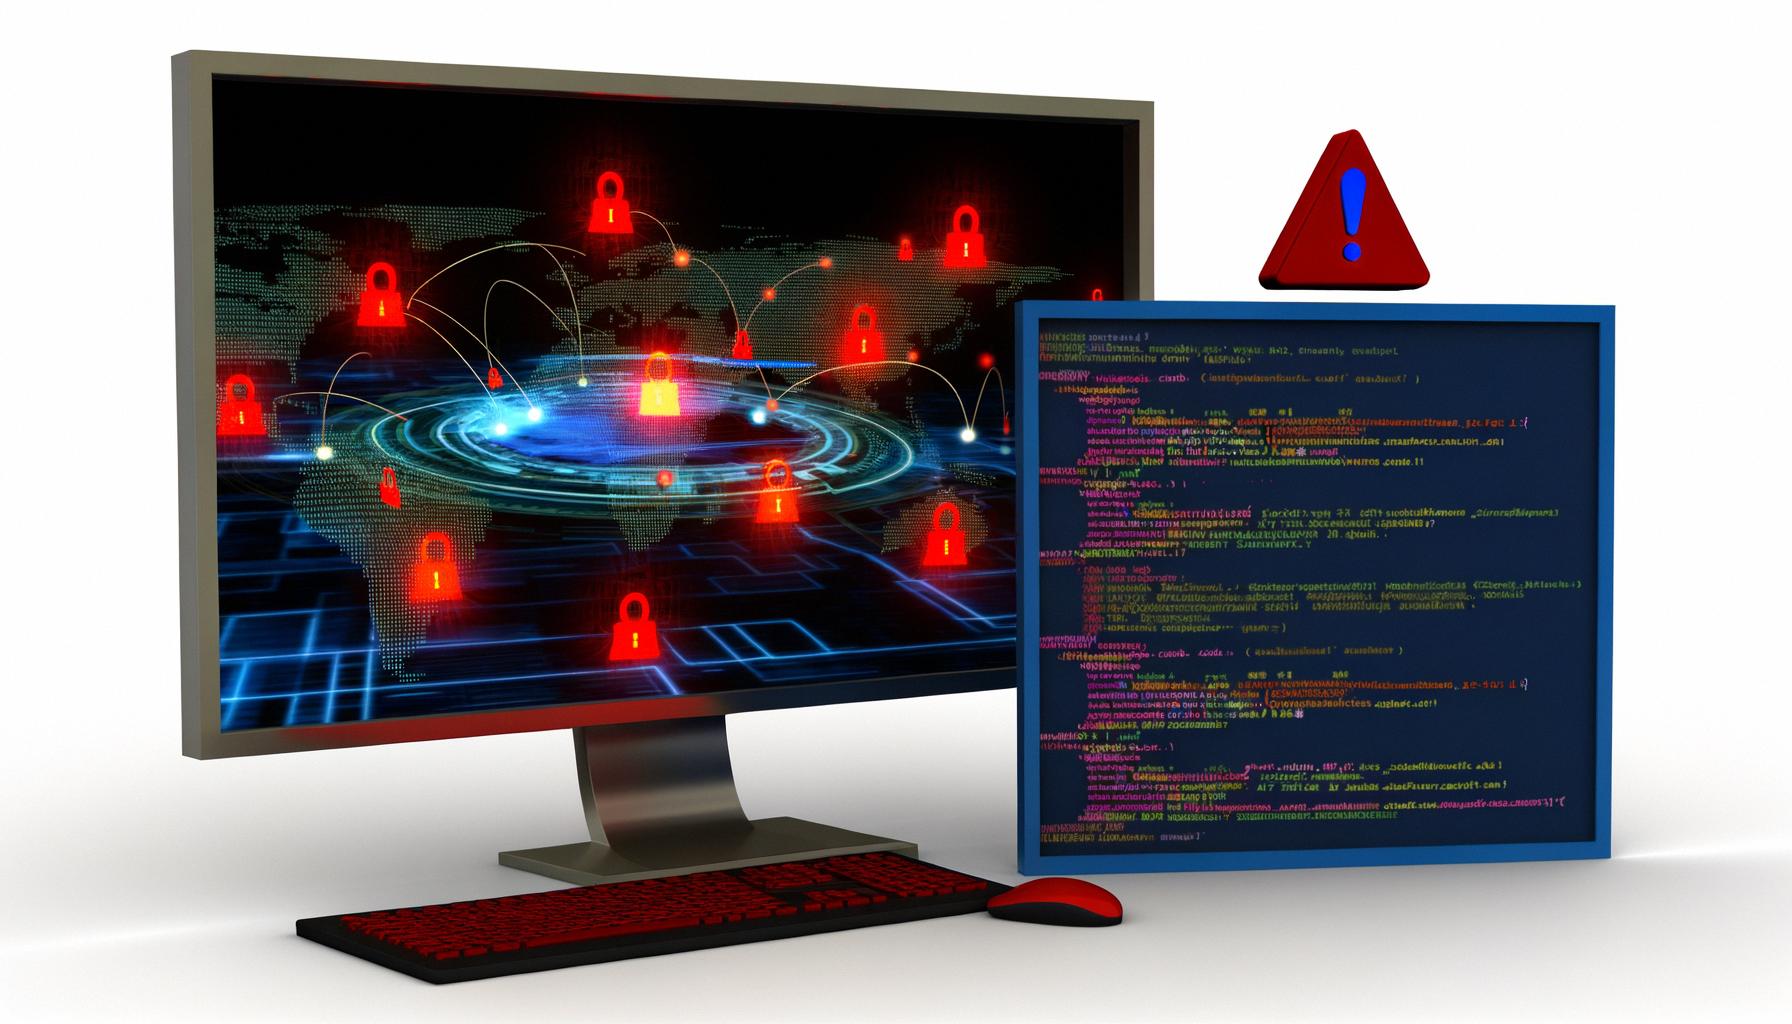 Multiple critical cybersecurity vulnerabilities disclosed